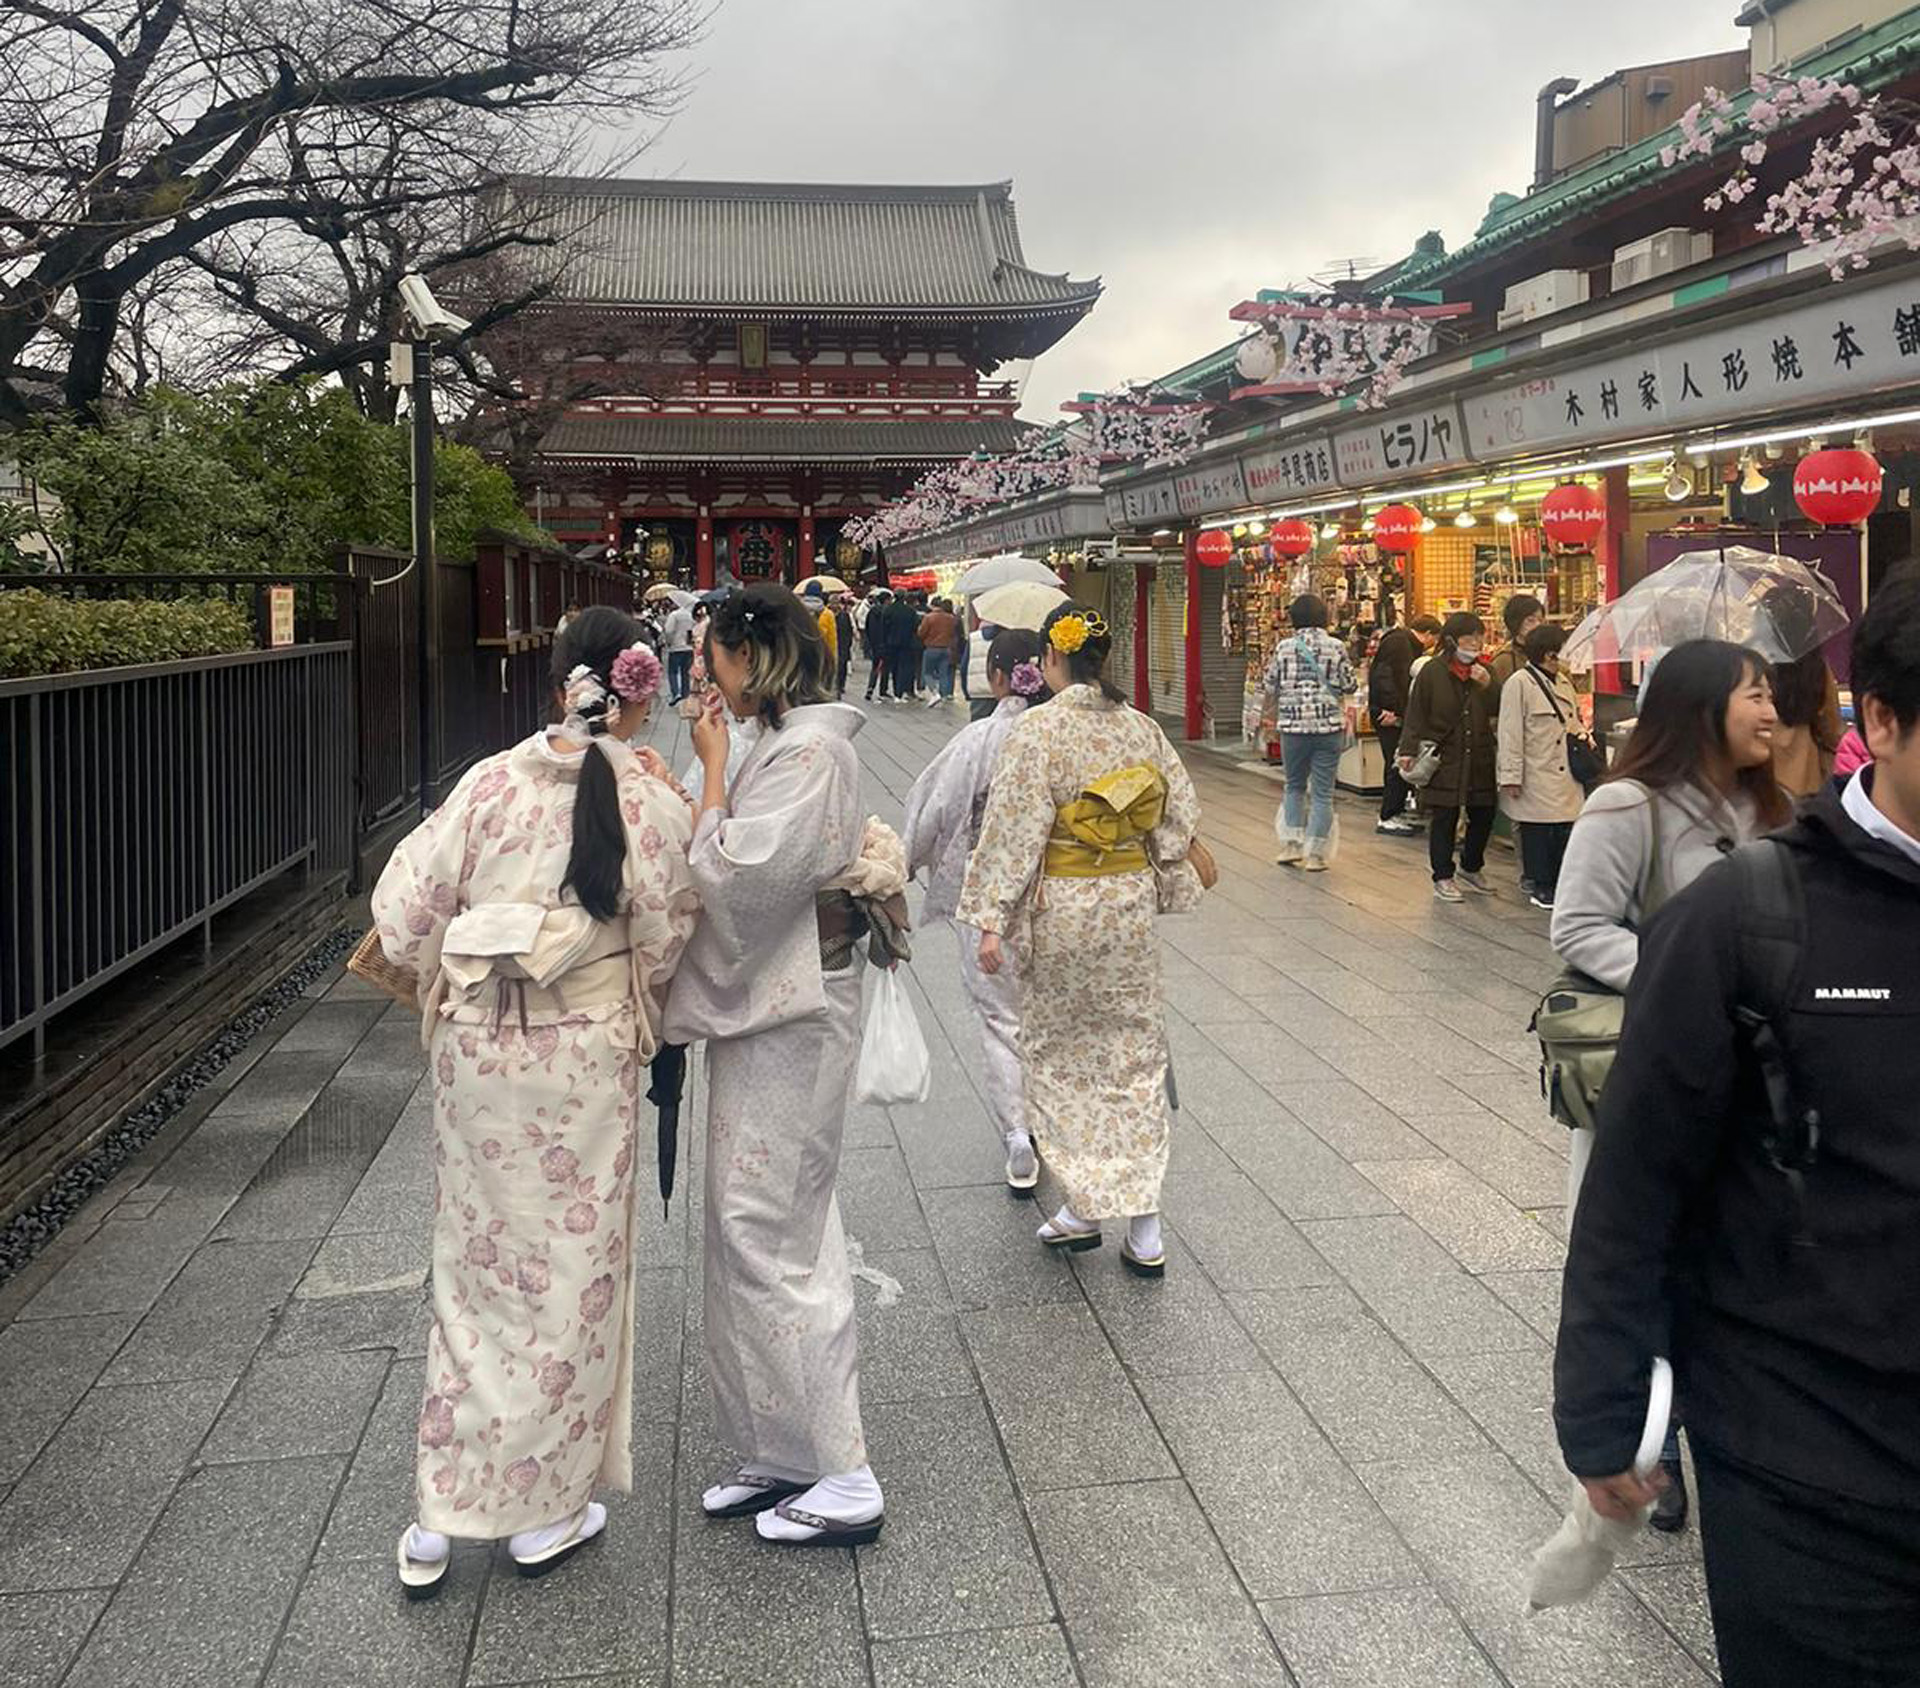 Street scene showing women wearing traditional kimonos